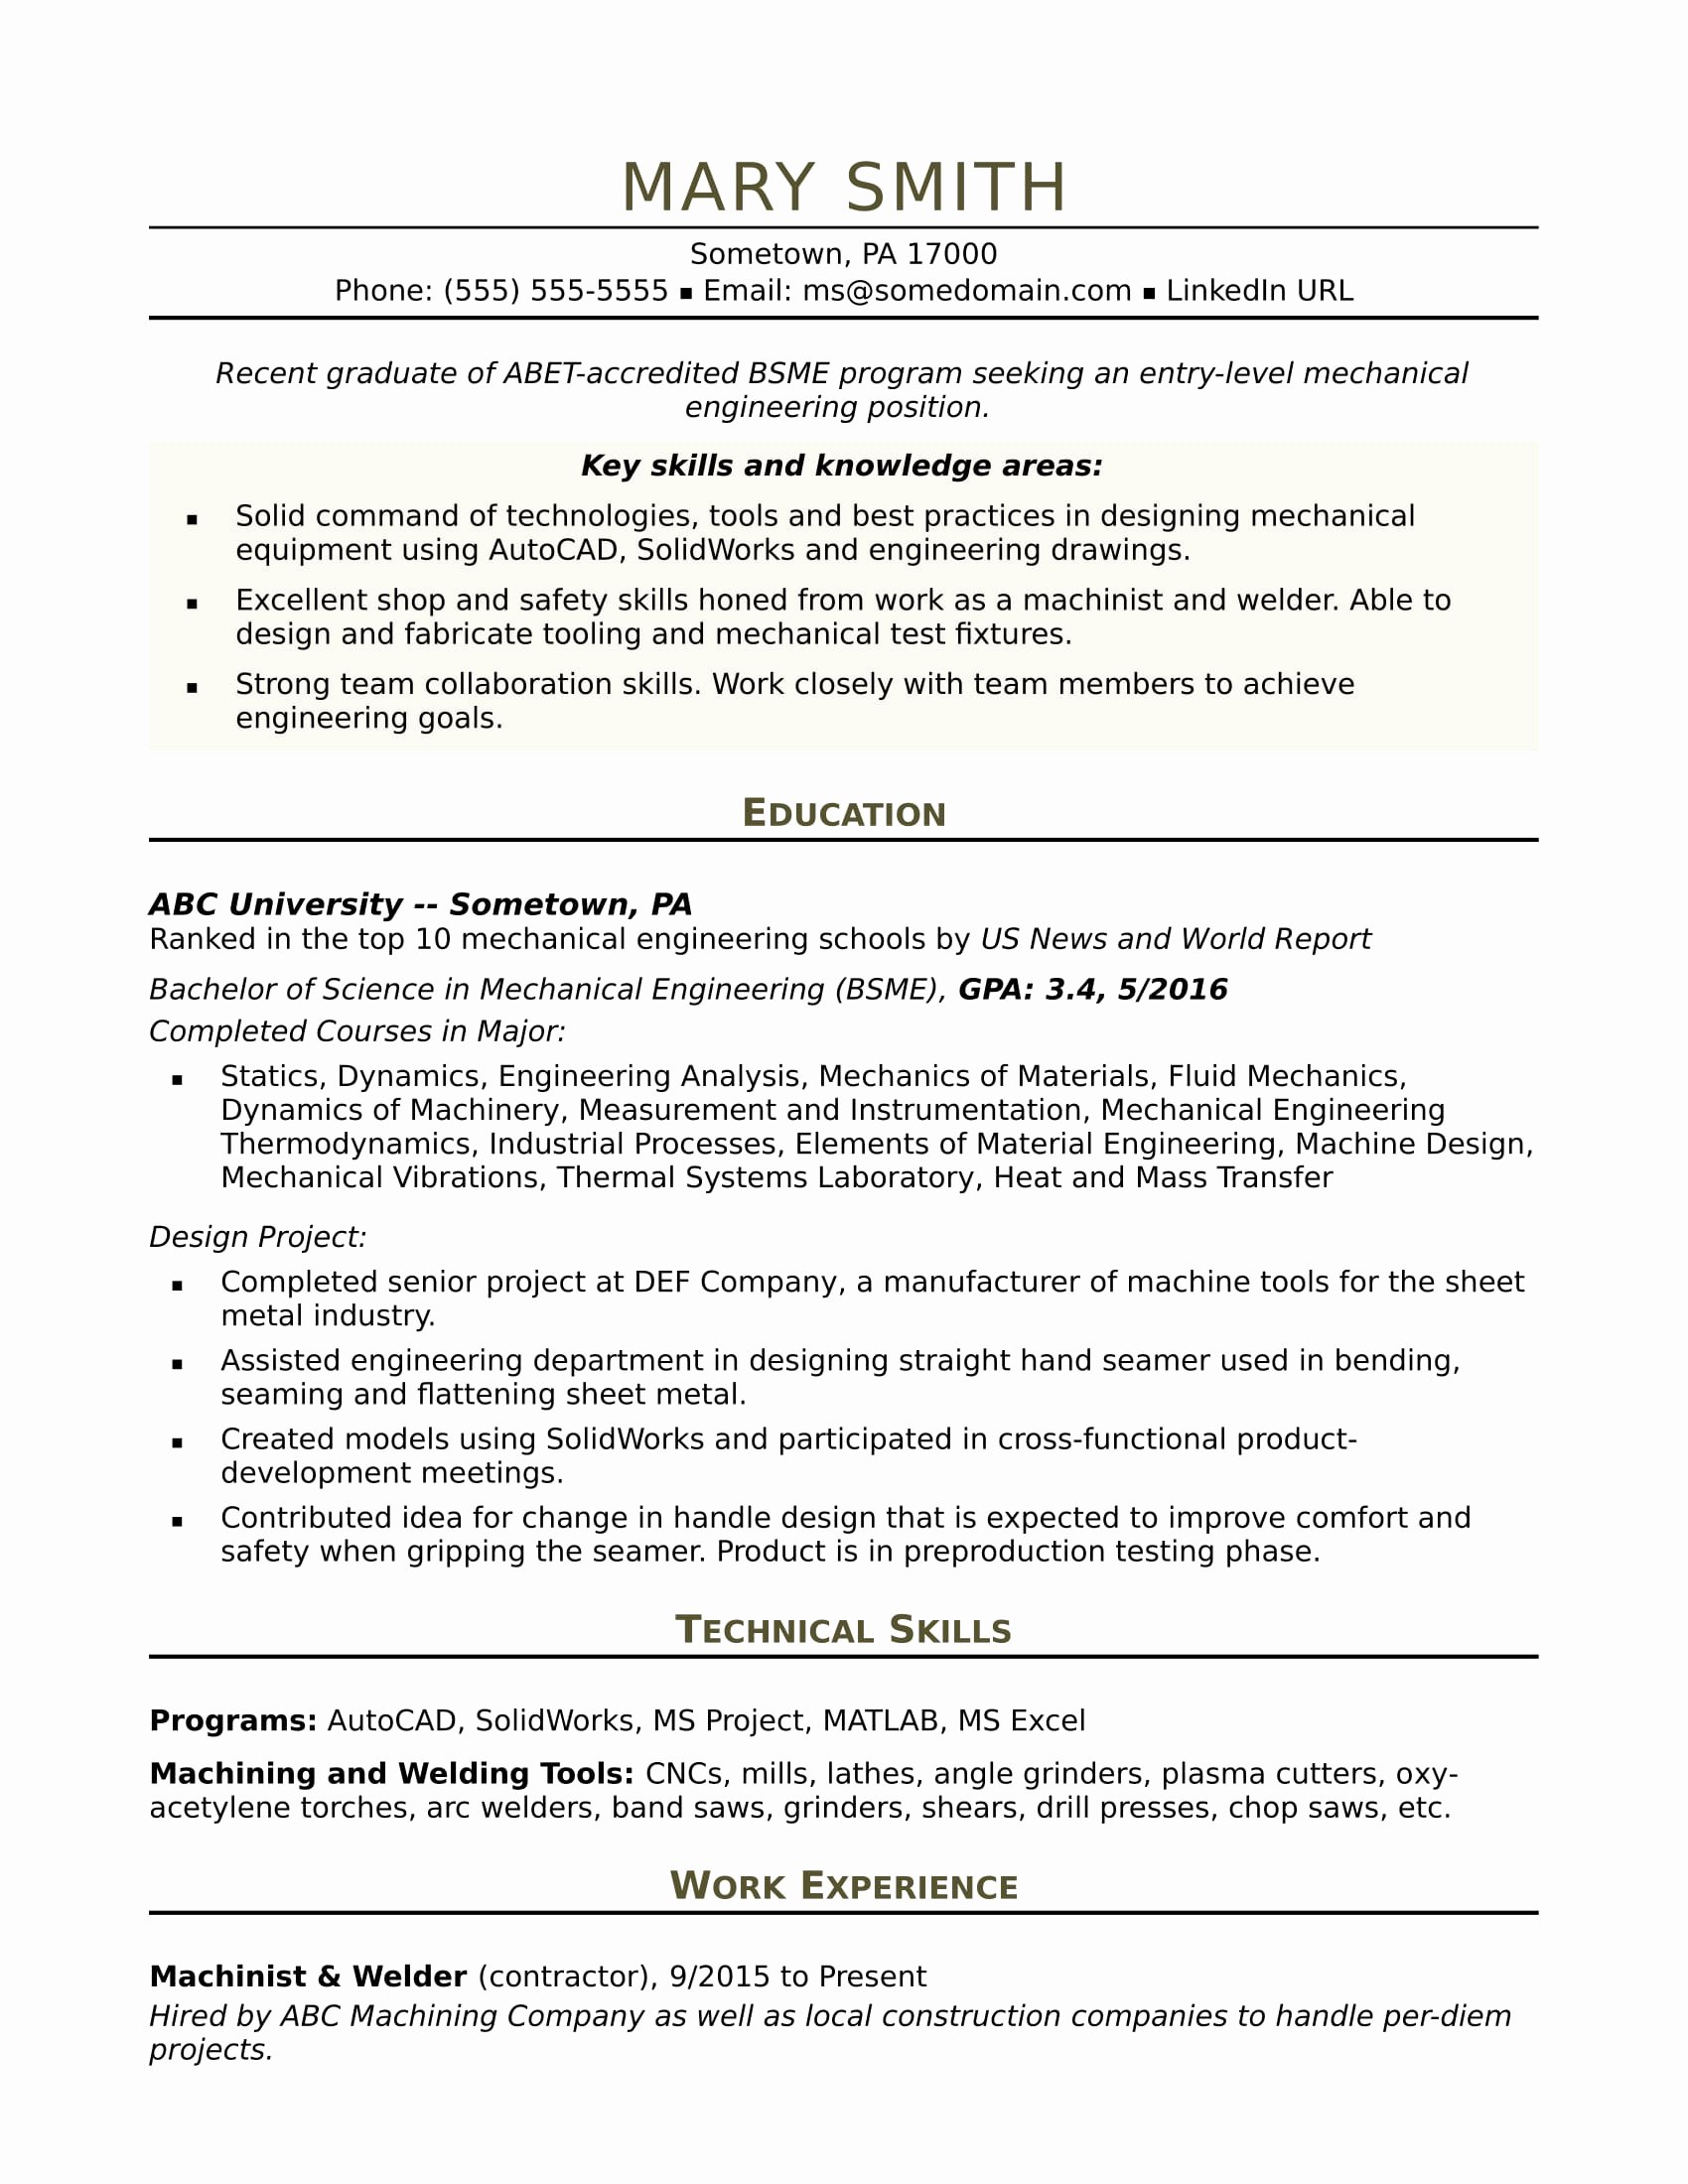 Sample Resume for An Entry Level Mechanical Engineer